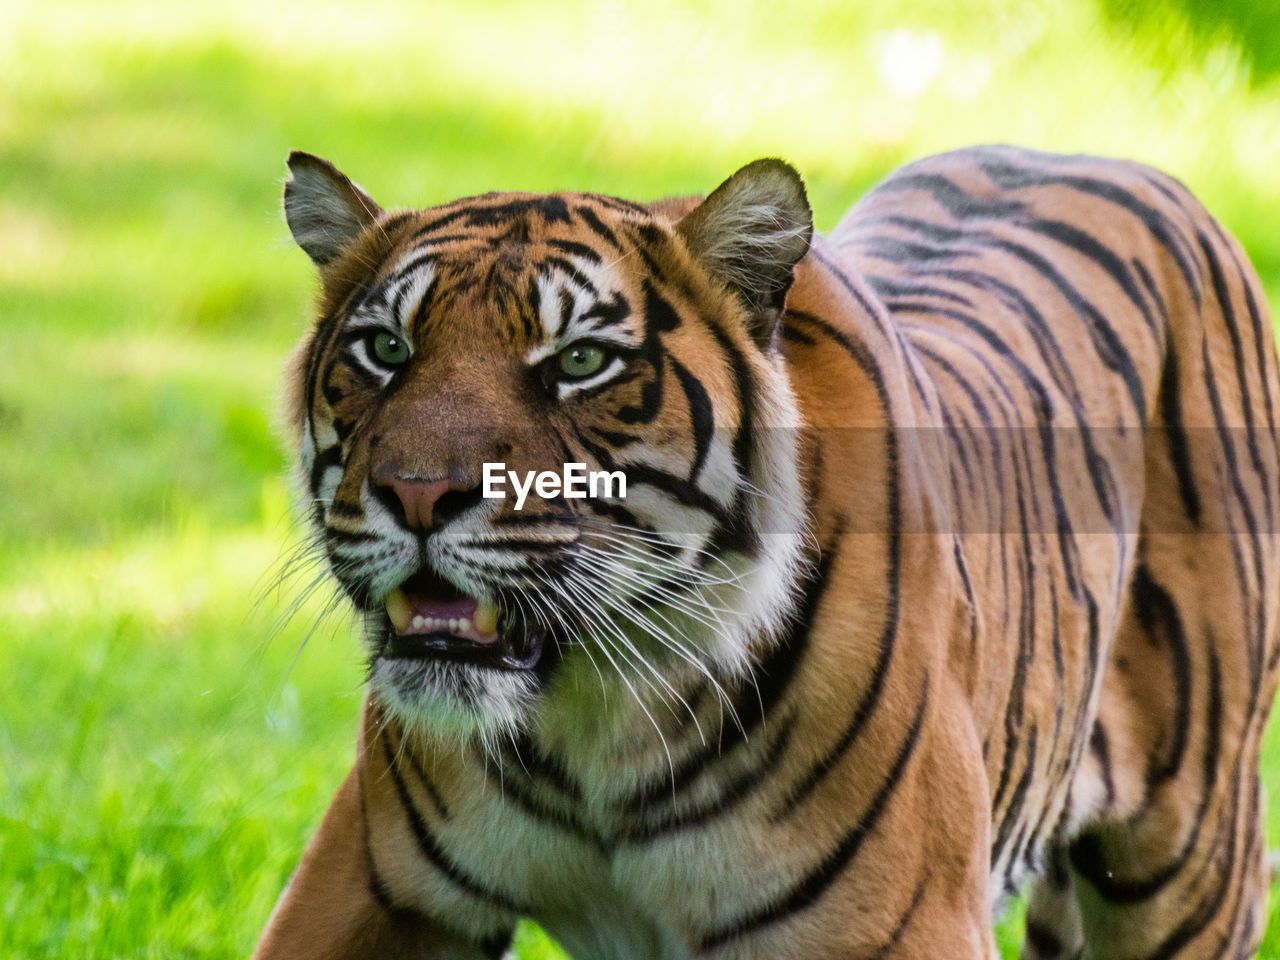 PORTRAIT OF A TIGER